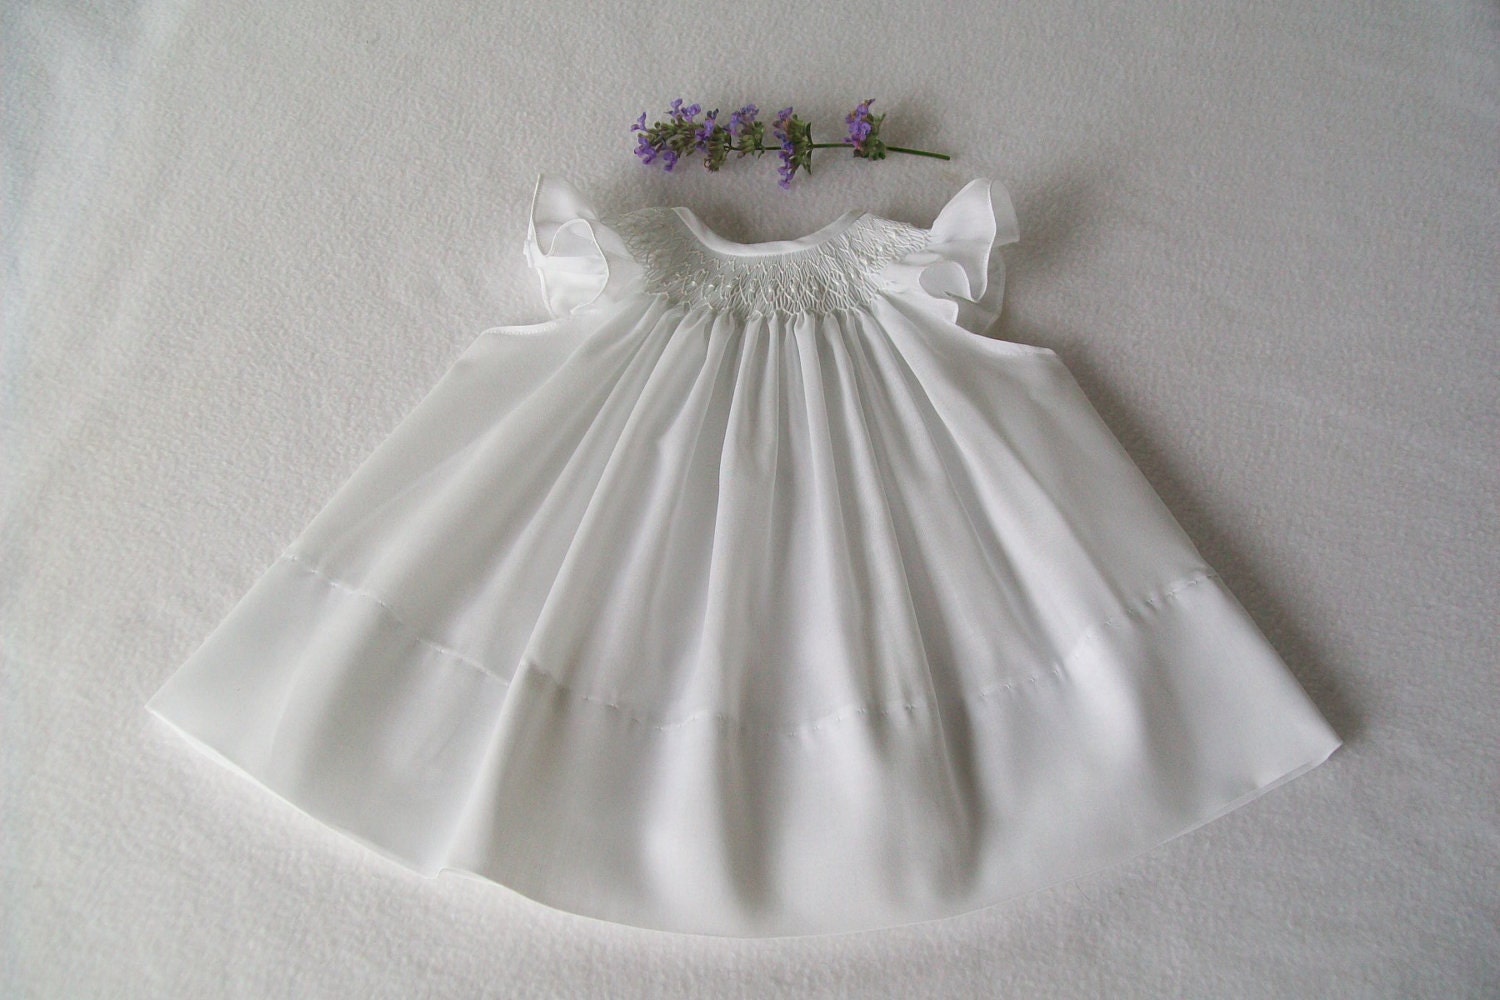 White Baby Dresses